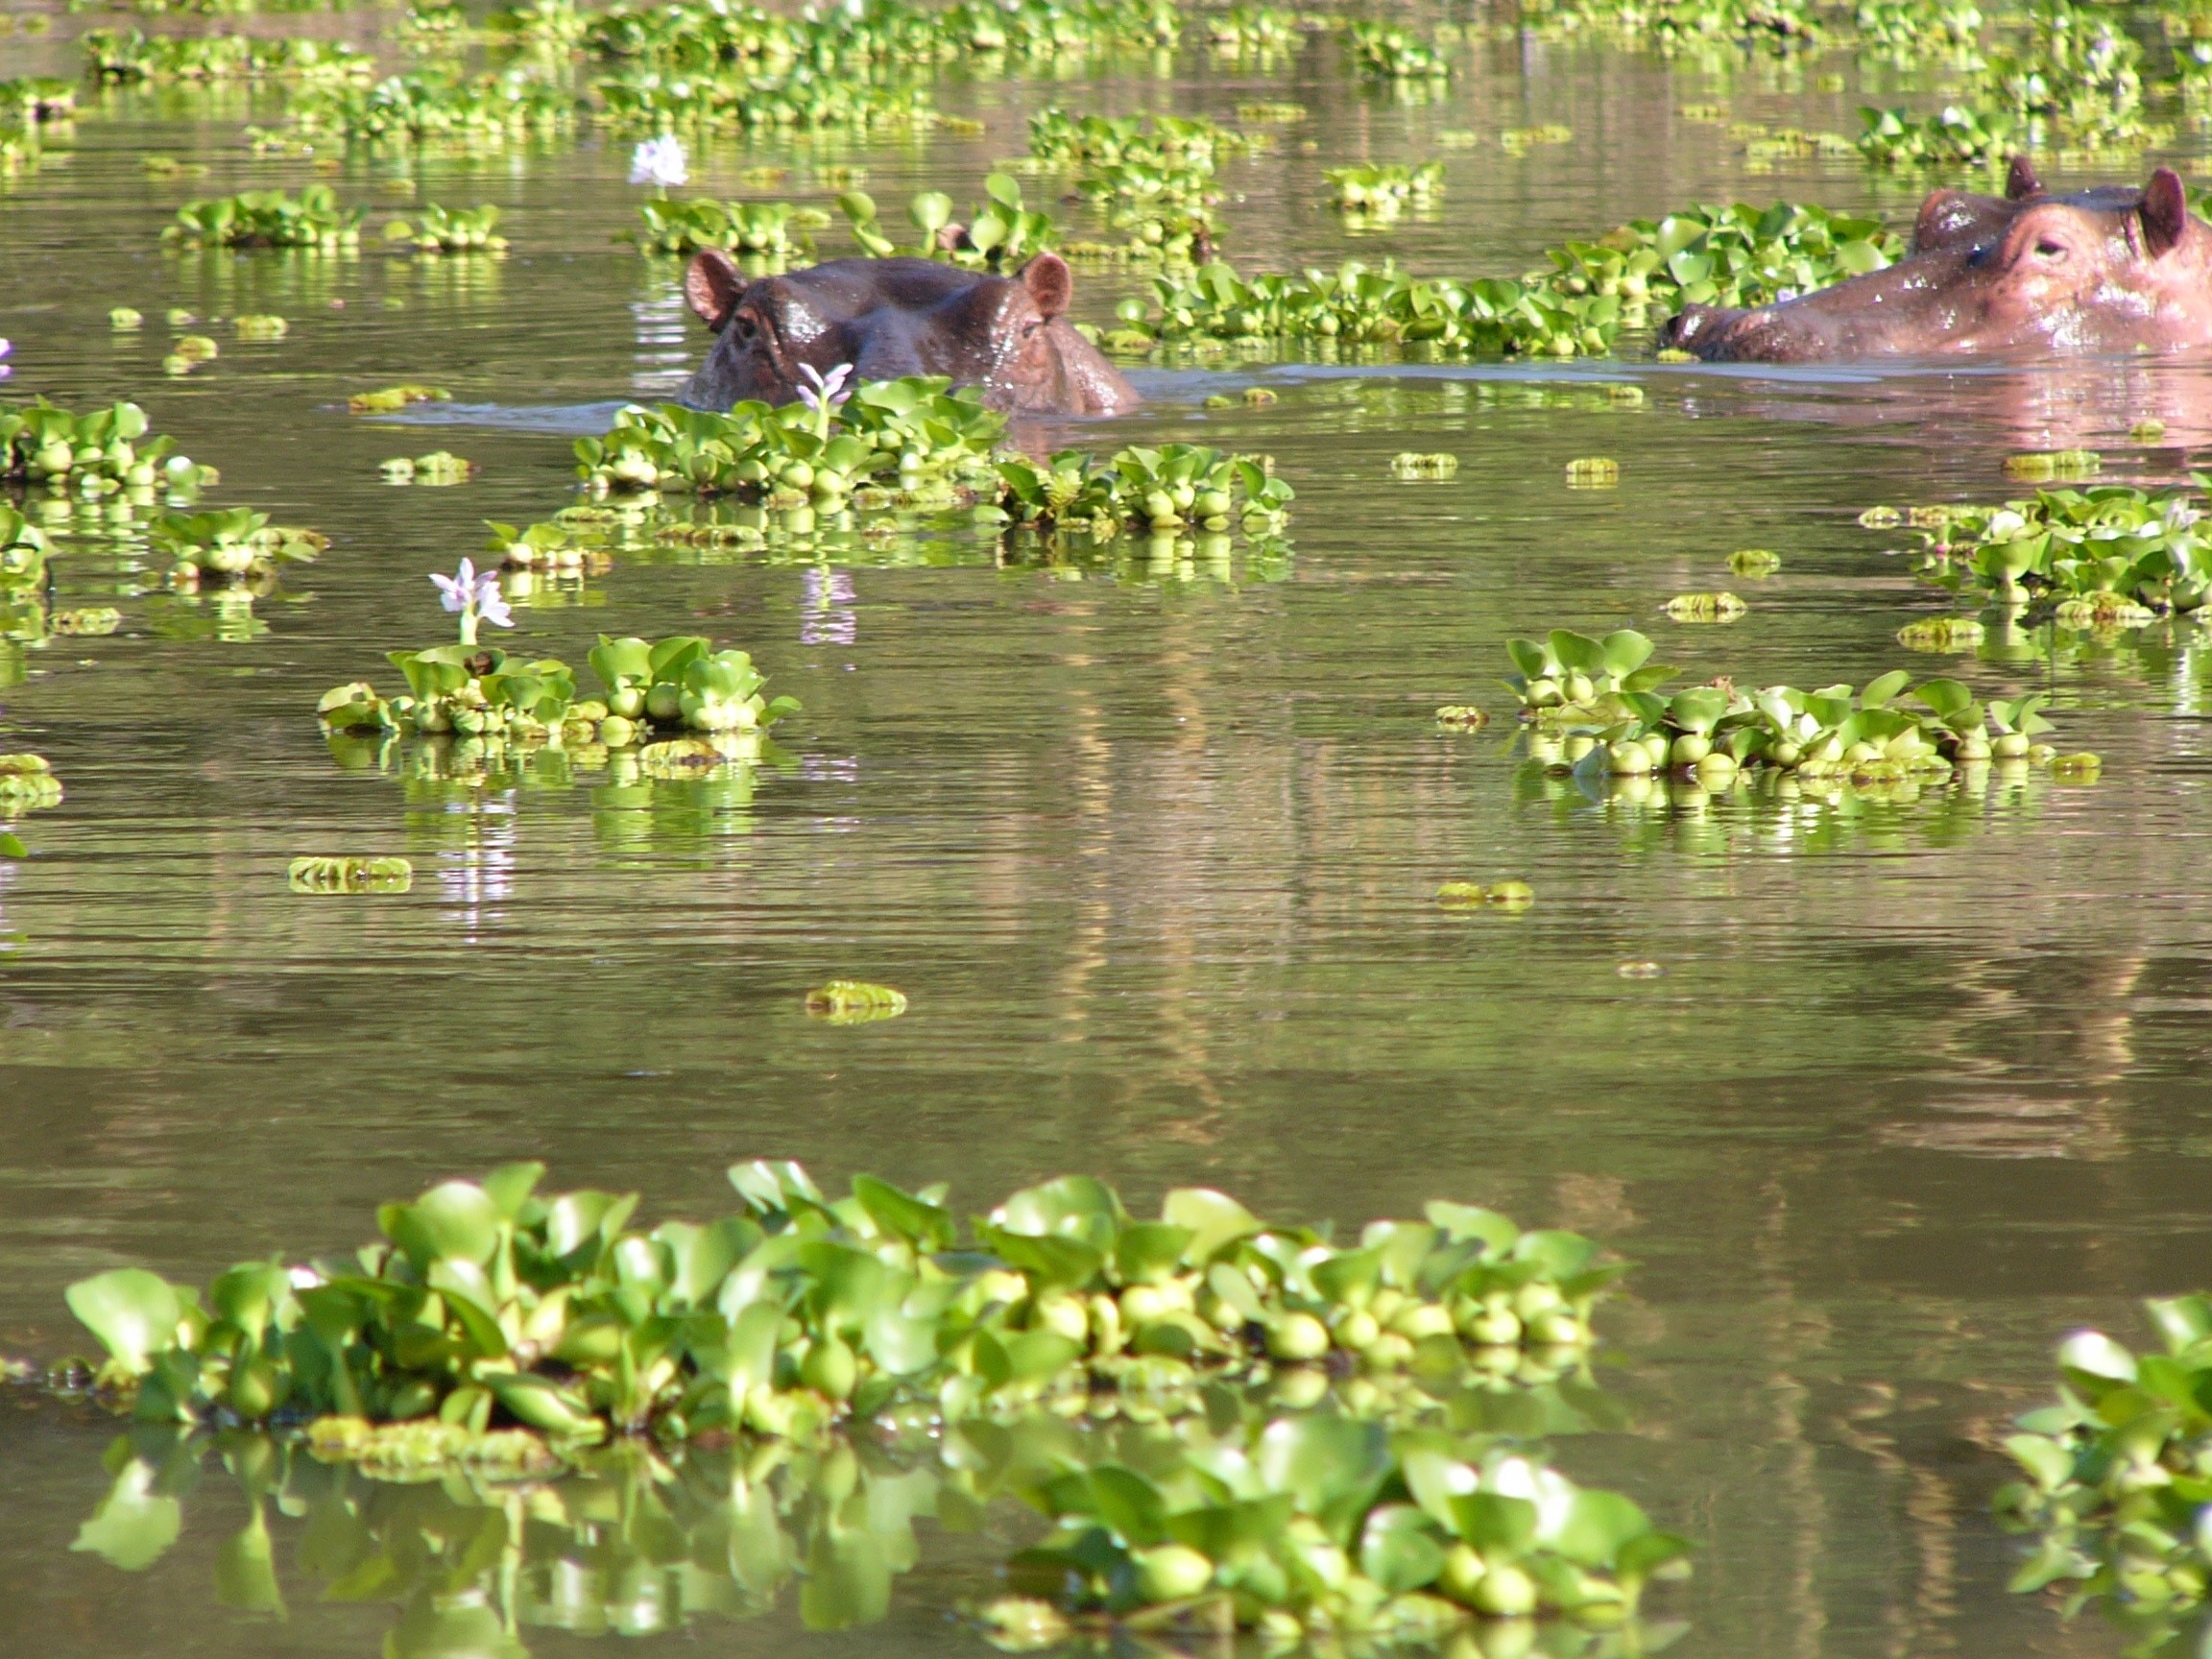 2 brown hippopotamus